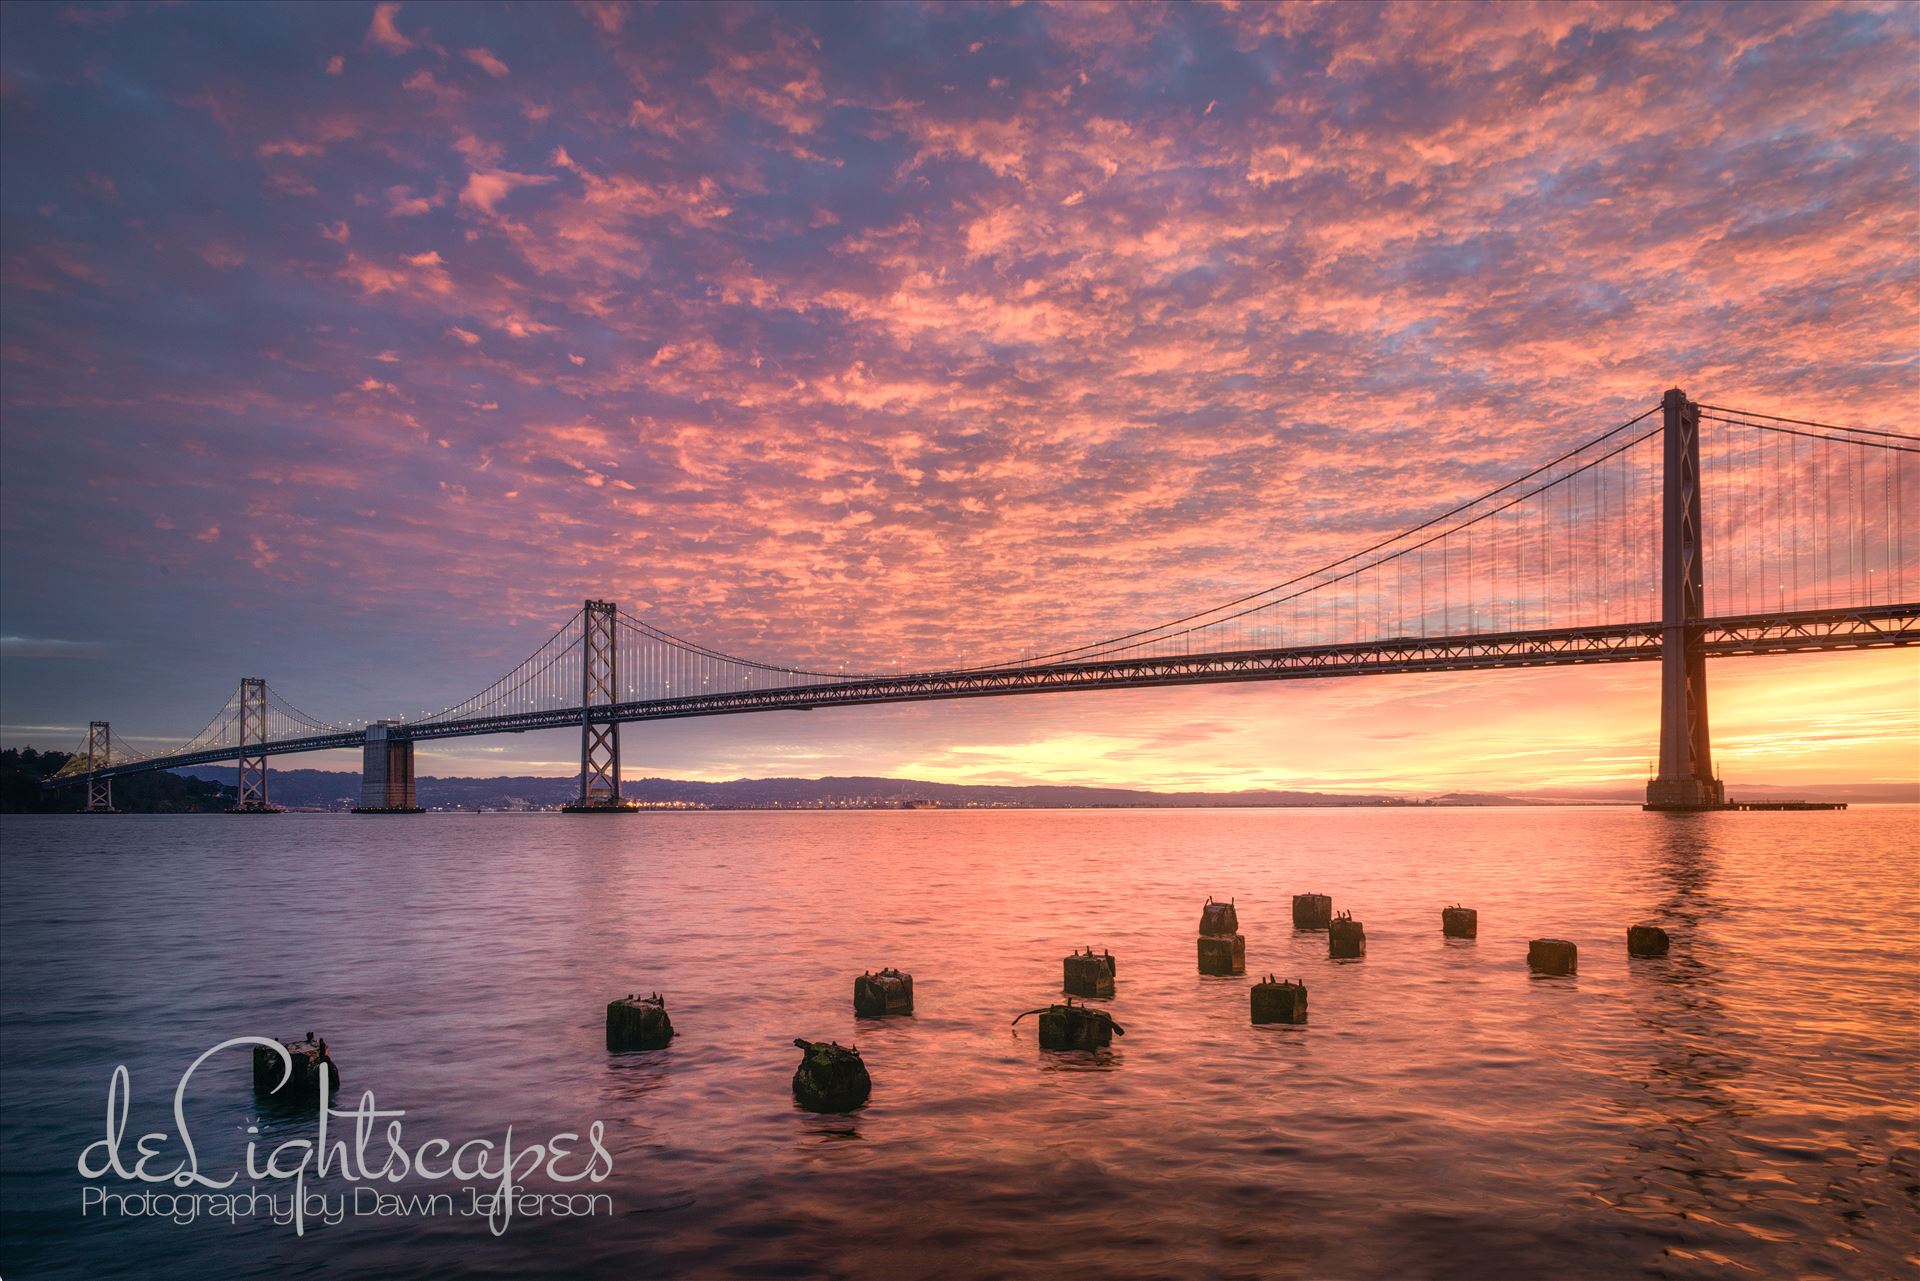 Cotton Candy Sunrise - A gorgeous pink sunrise at the San Francisco Bay Bridge by Dawn Jefferson